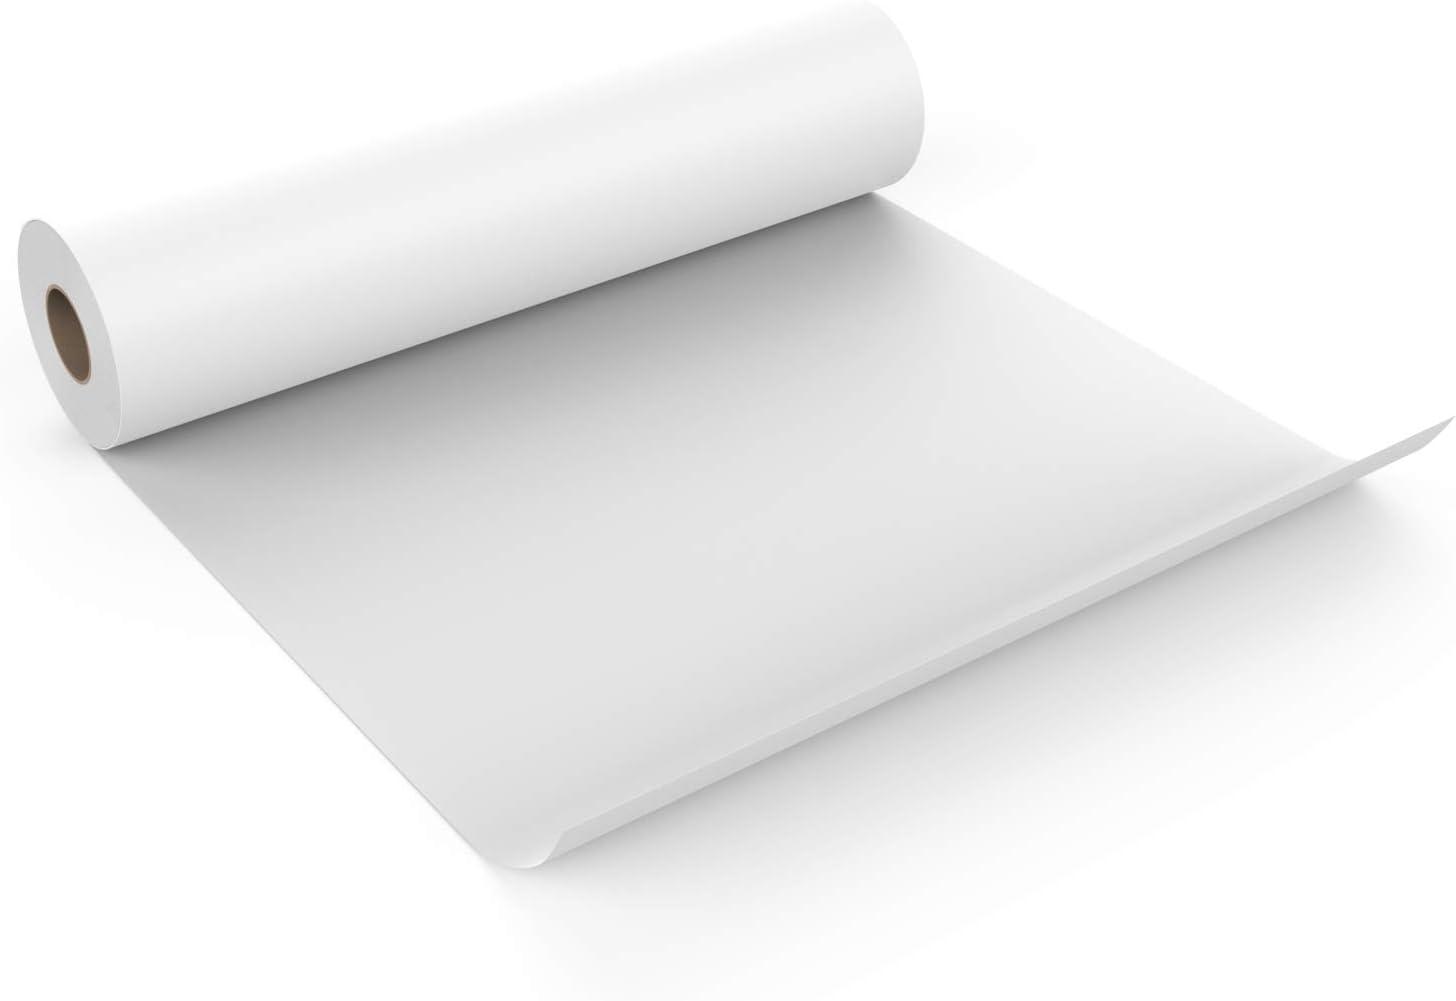 Easel Roll, White, 18 x 100